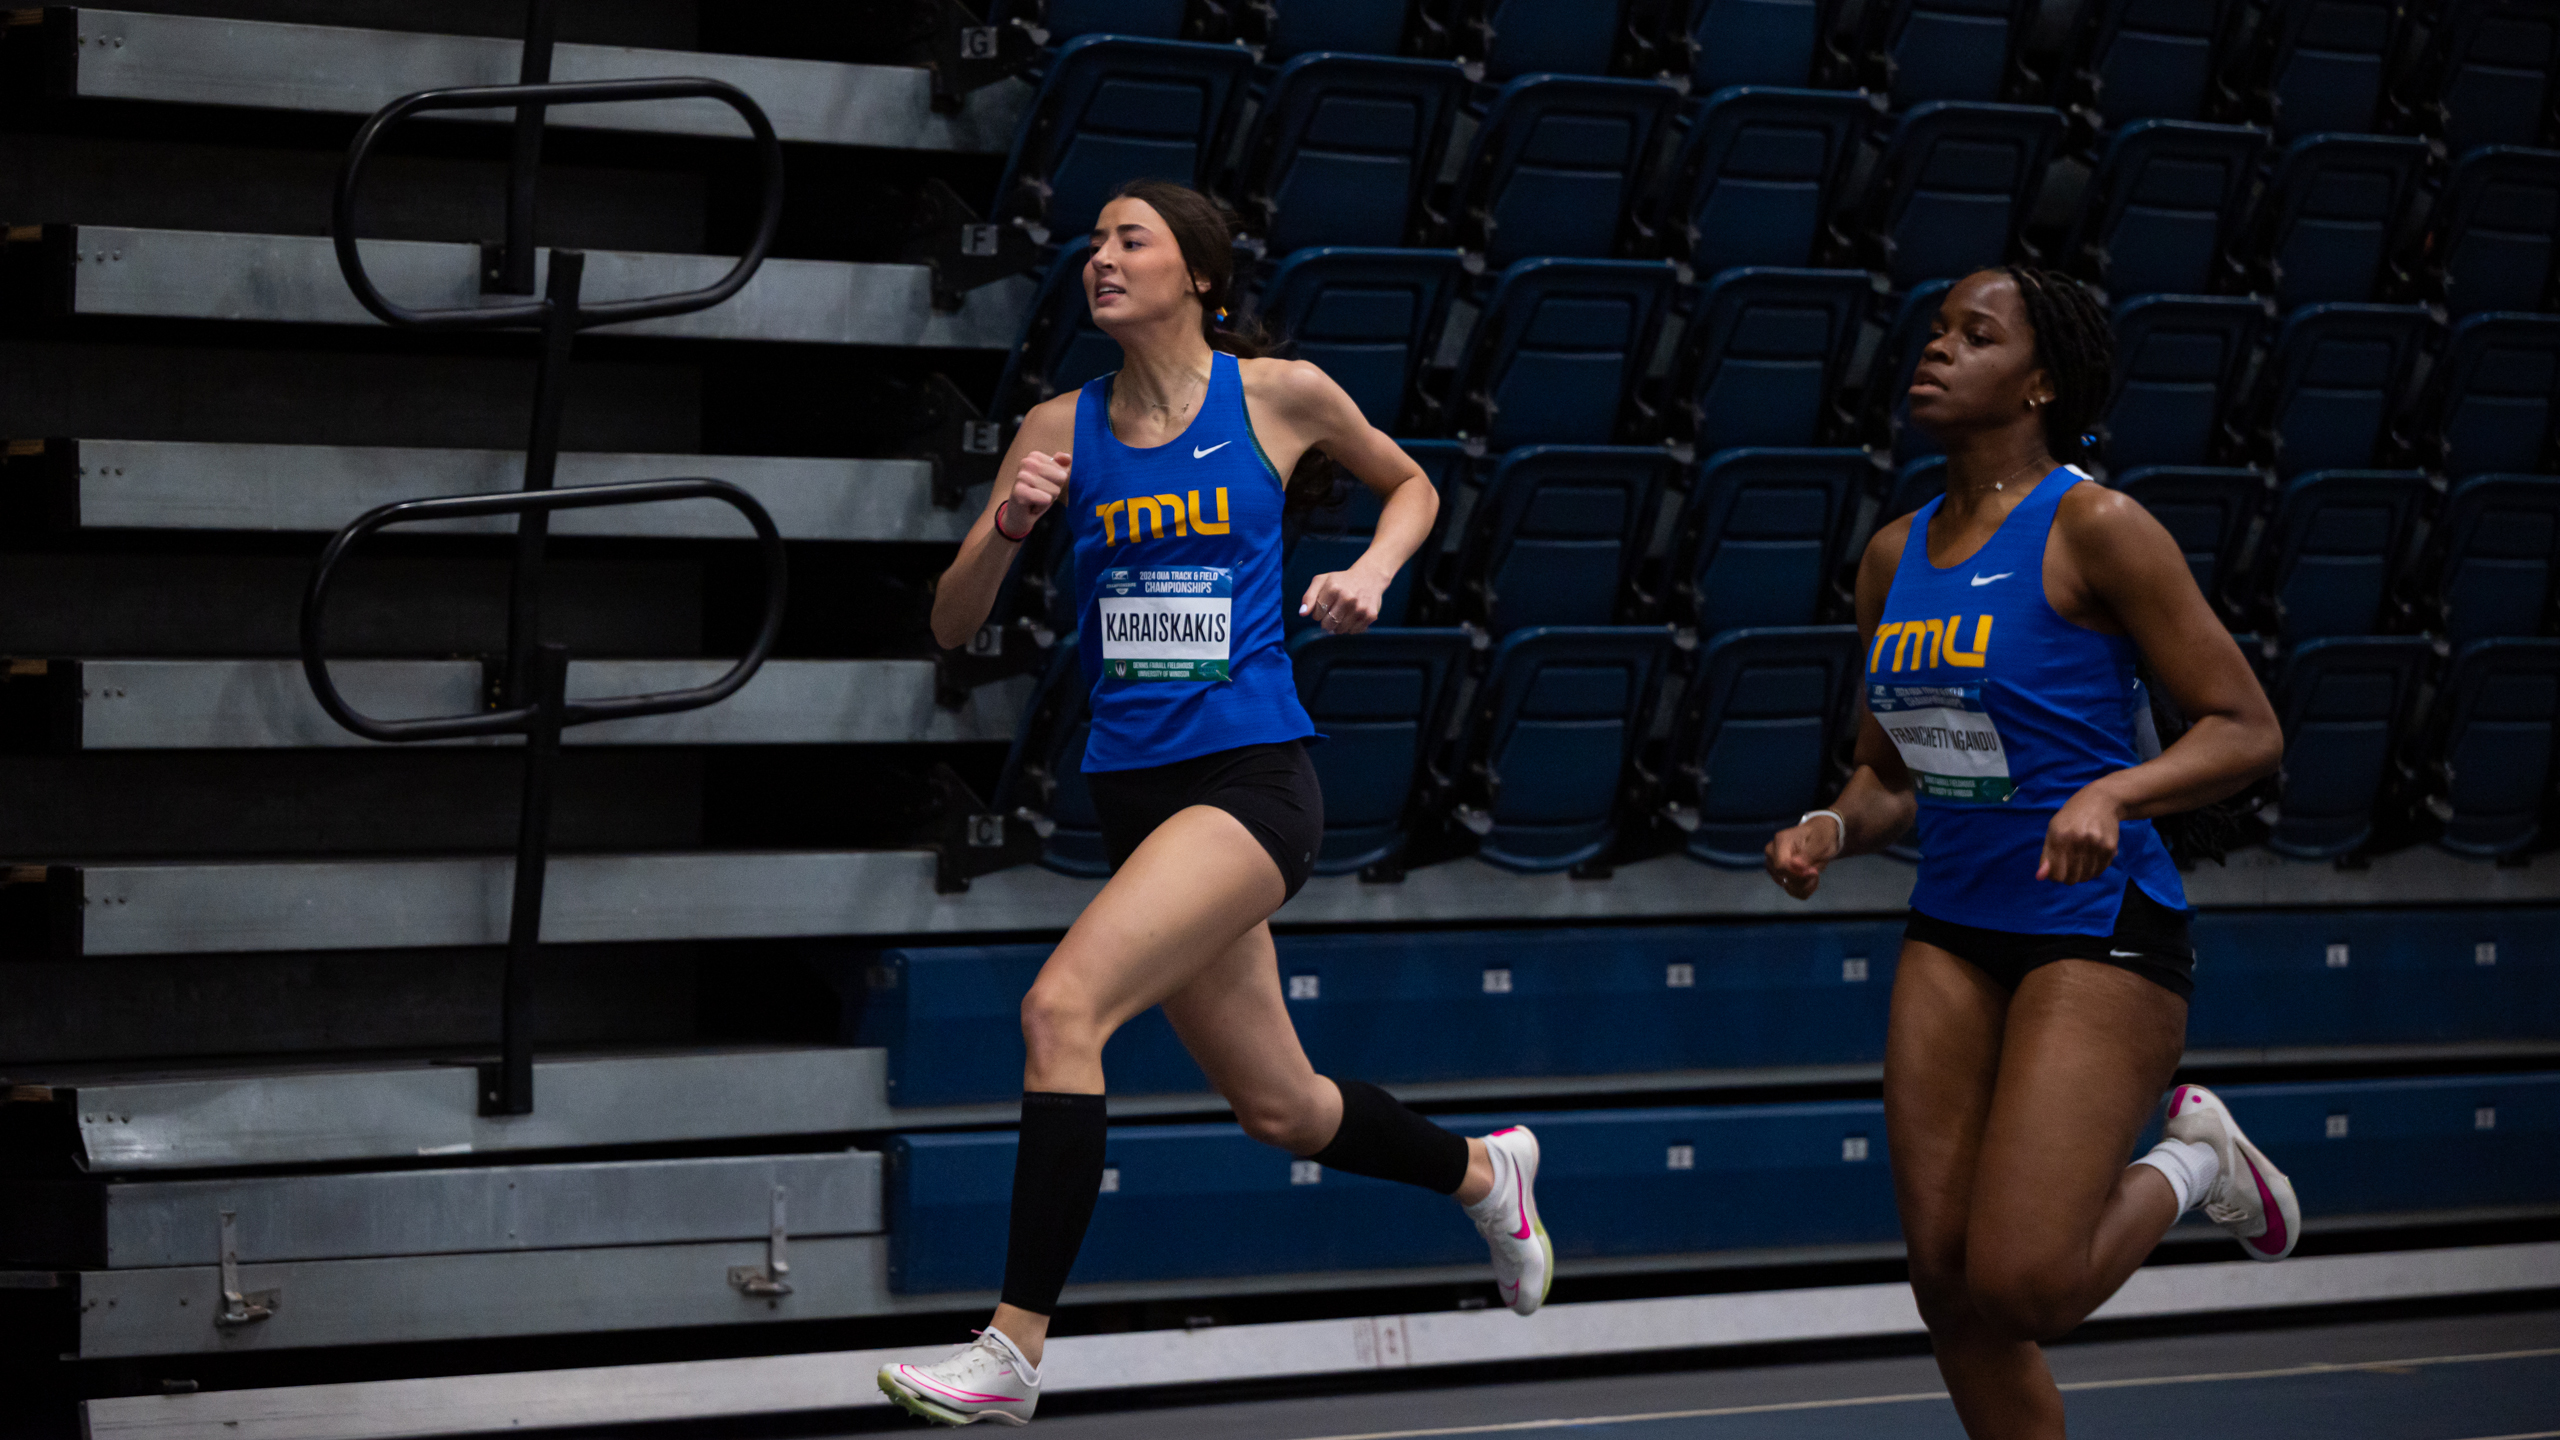 TMU track athlete Christina Karaiskakis runs alongside her teammate